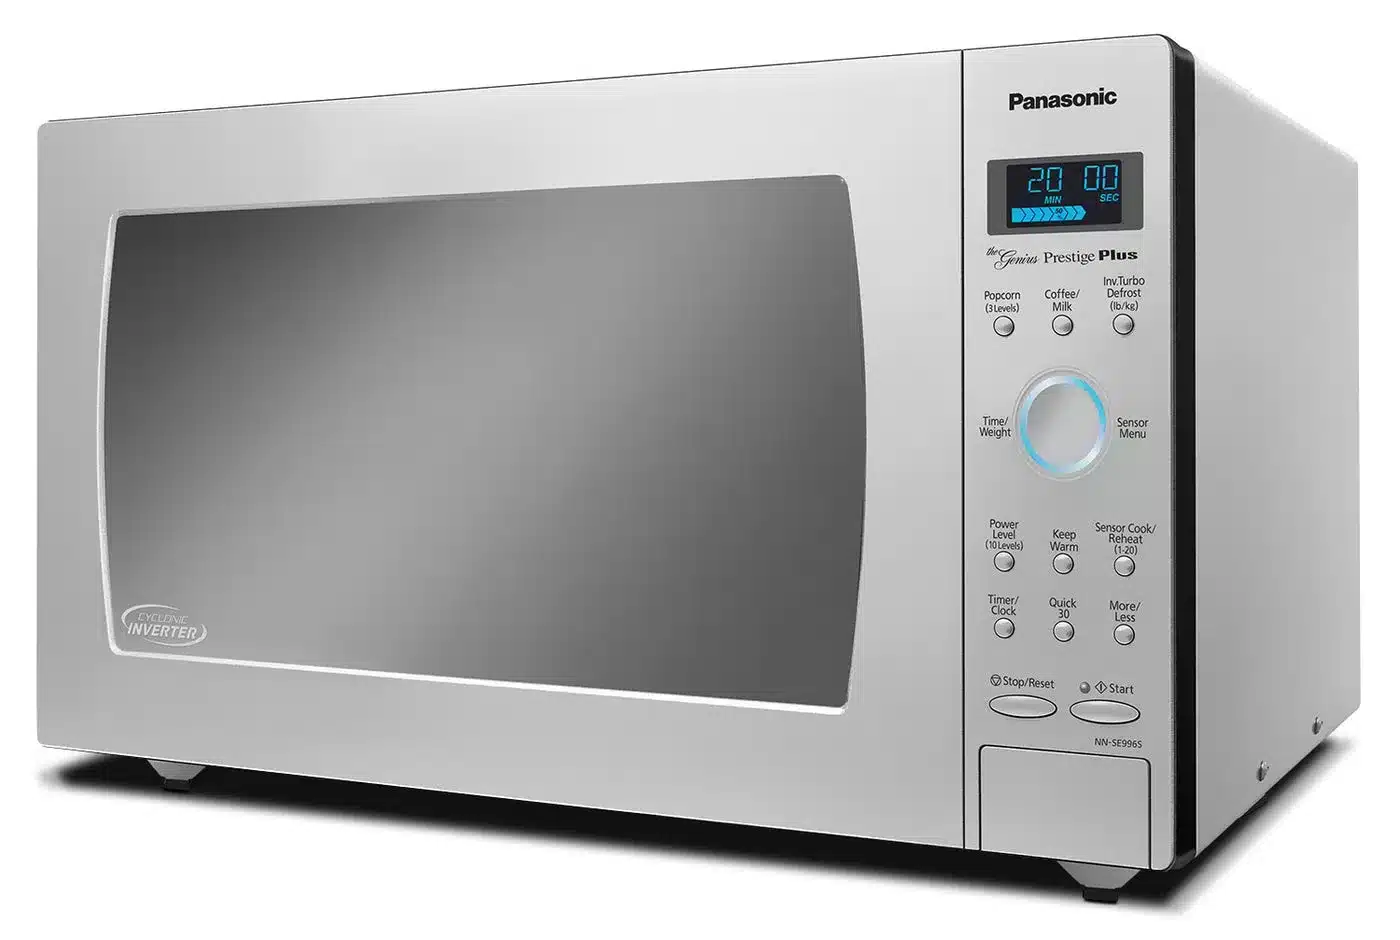 How Do You Unlock a Panasonic Genius Microwave